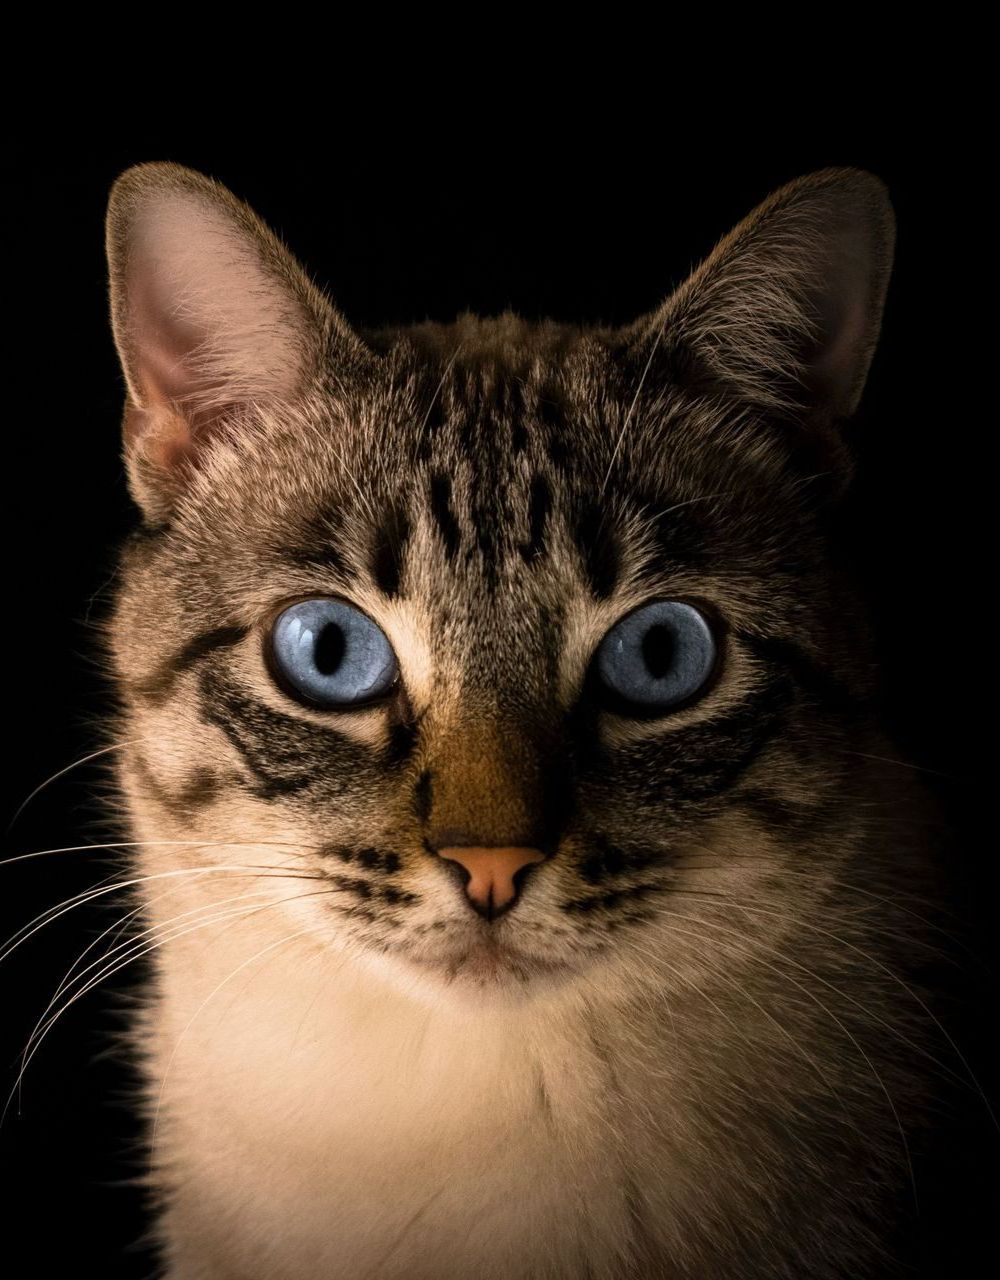 A close up of a cat 's face with blue eyes on a black background.